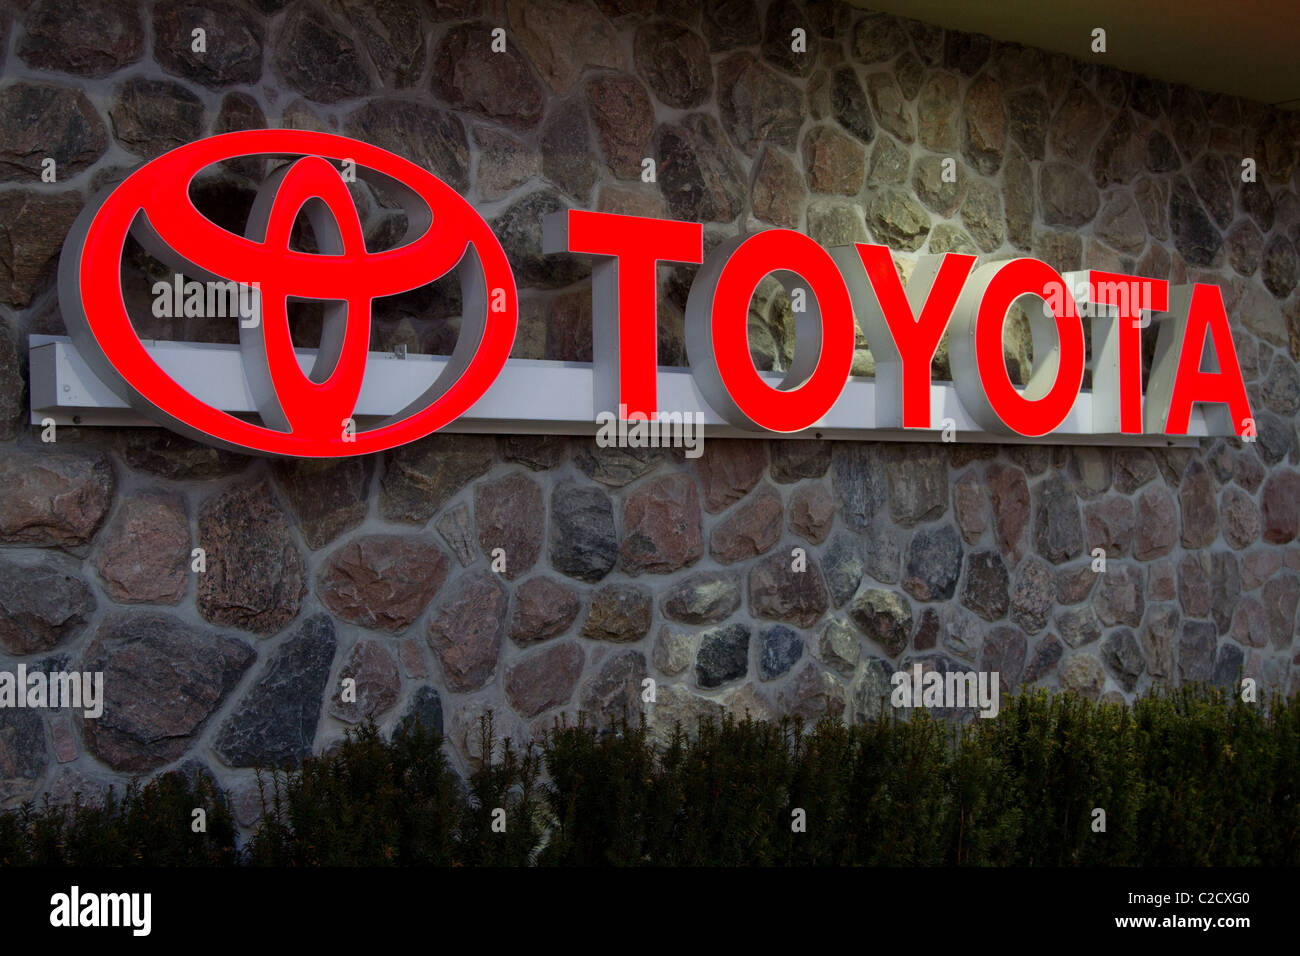 Toyota brickwall dealership logo neon sign Stock Photo